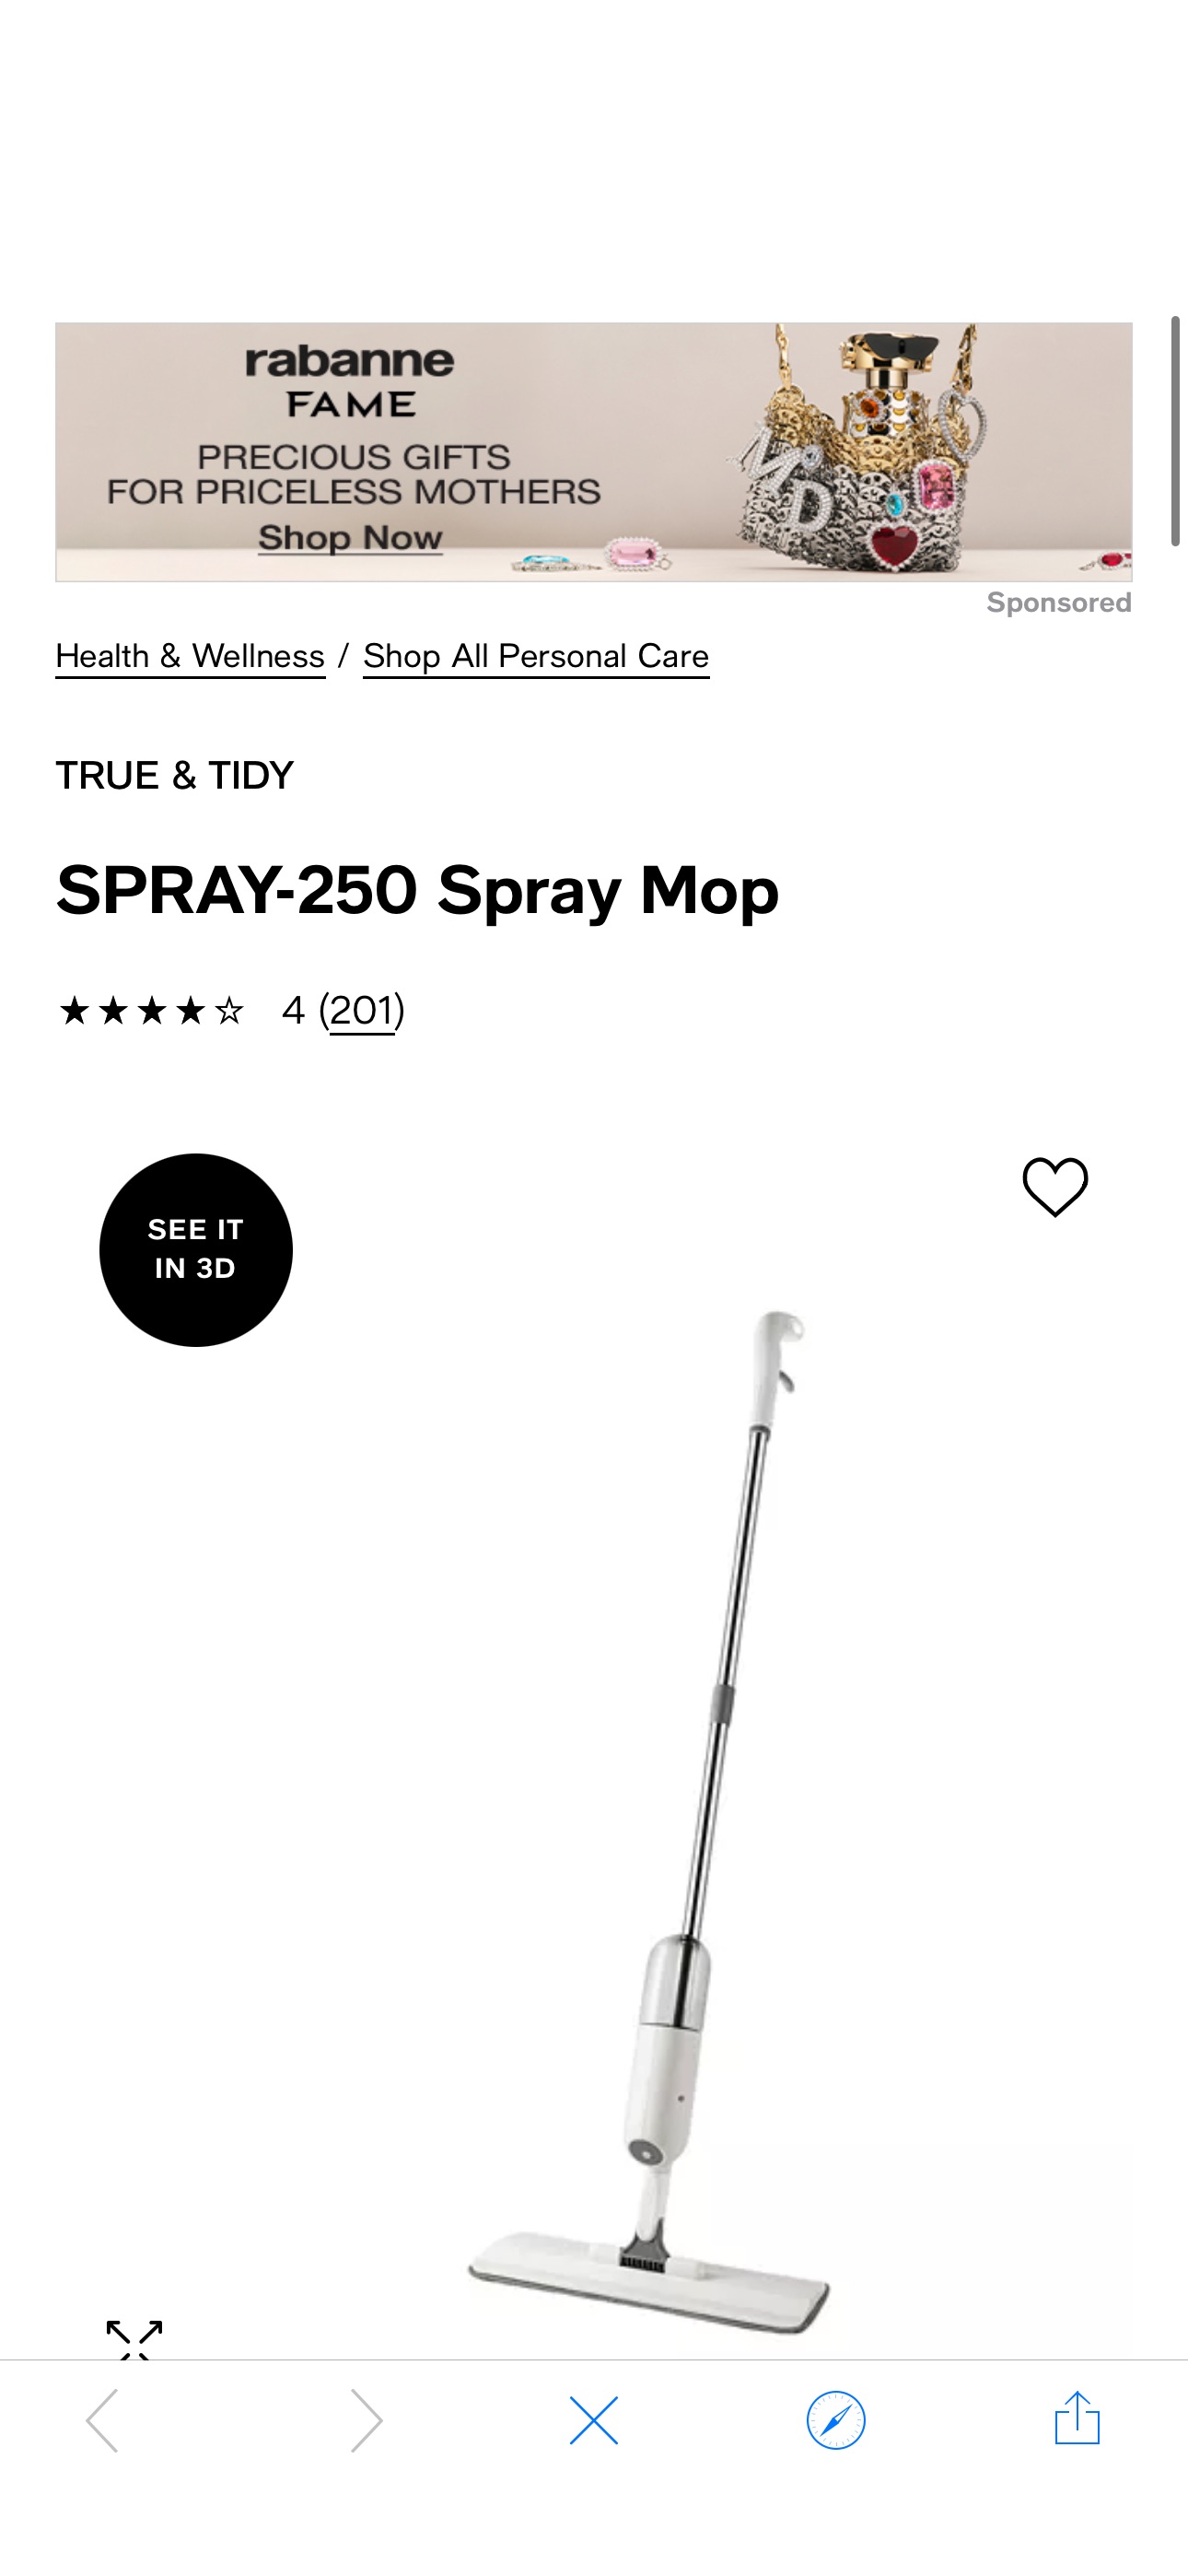 True & Tidy SPRAY-250 Spray Mop - Macy's